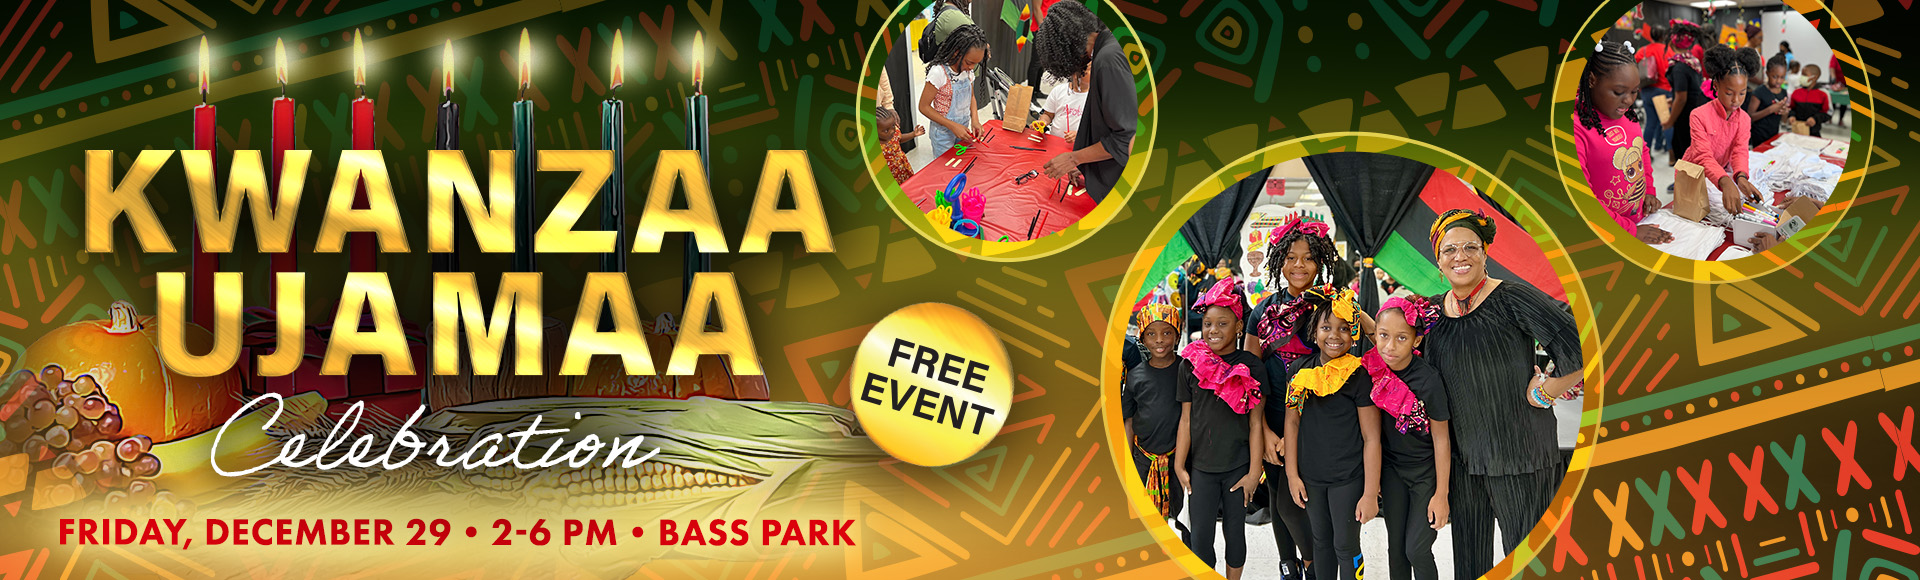 Kwanzaa Ujamaa Celebration. Friday, December 29. 2 to 6 PM. Bass Park. Free Event. 